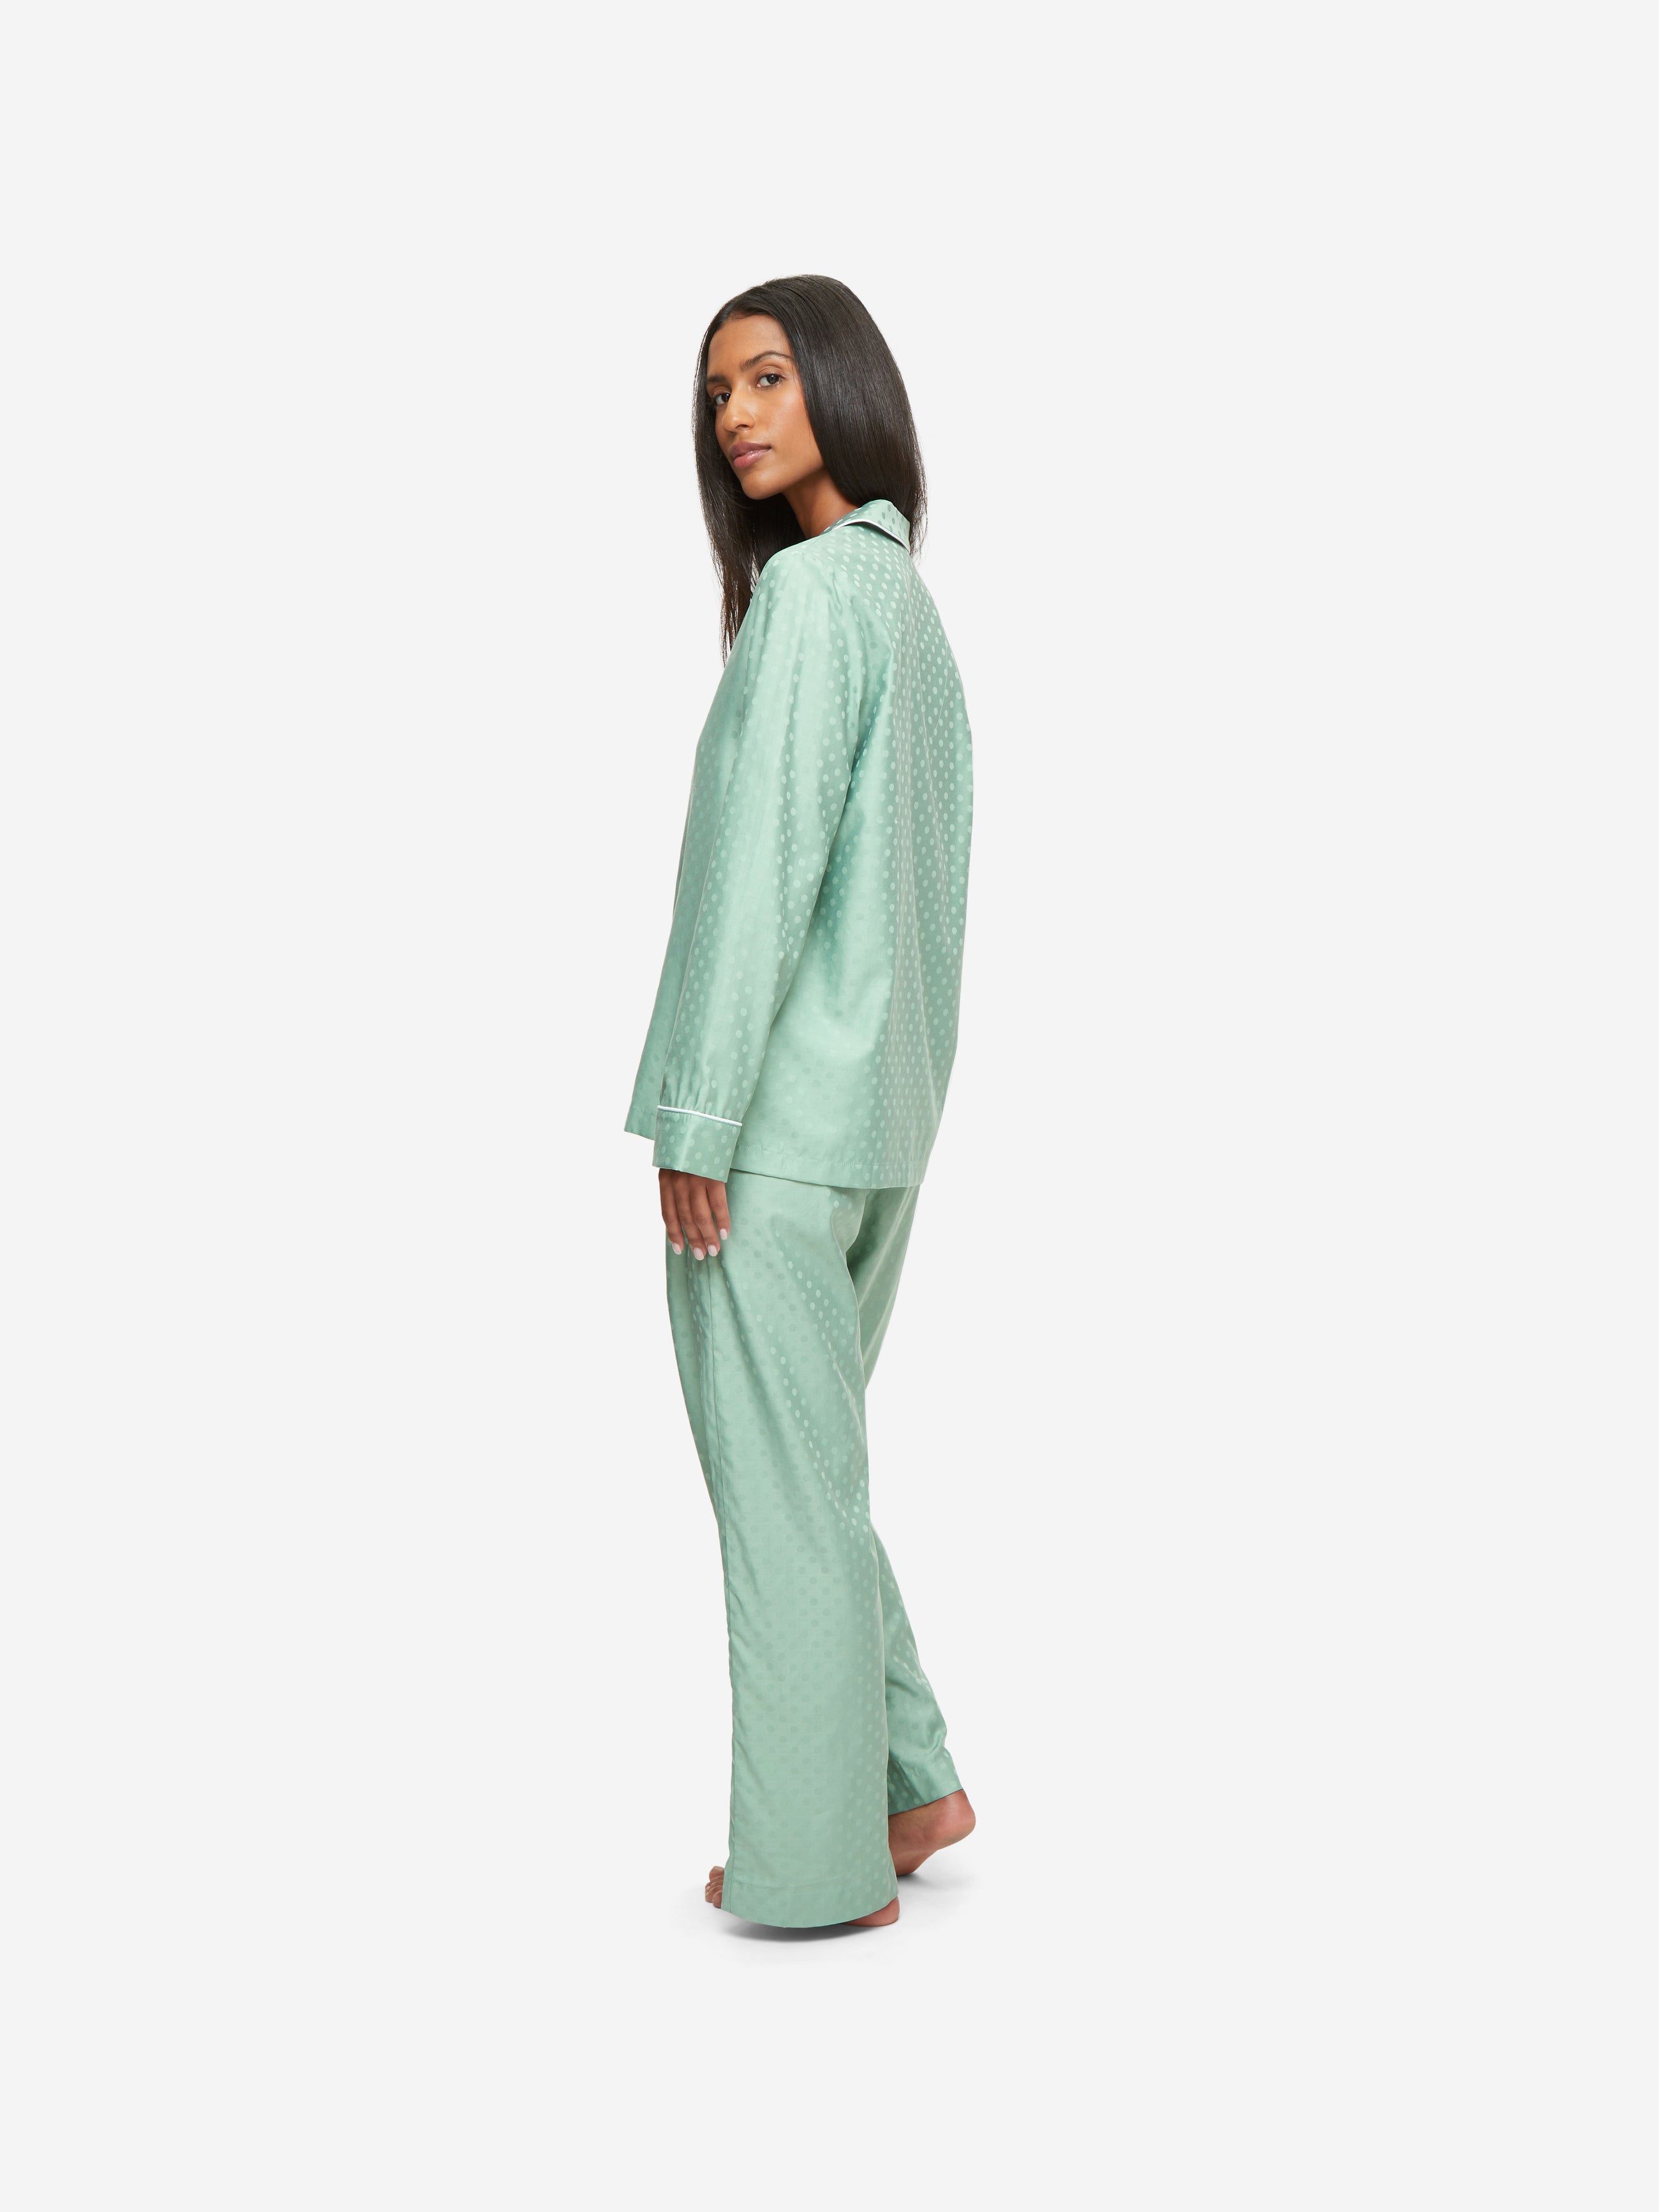 Women's Pyjamas Kate Cotton Jacquard Green